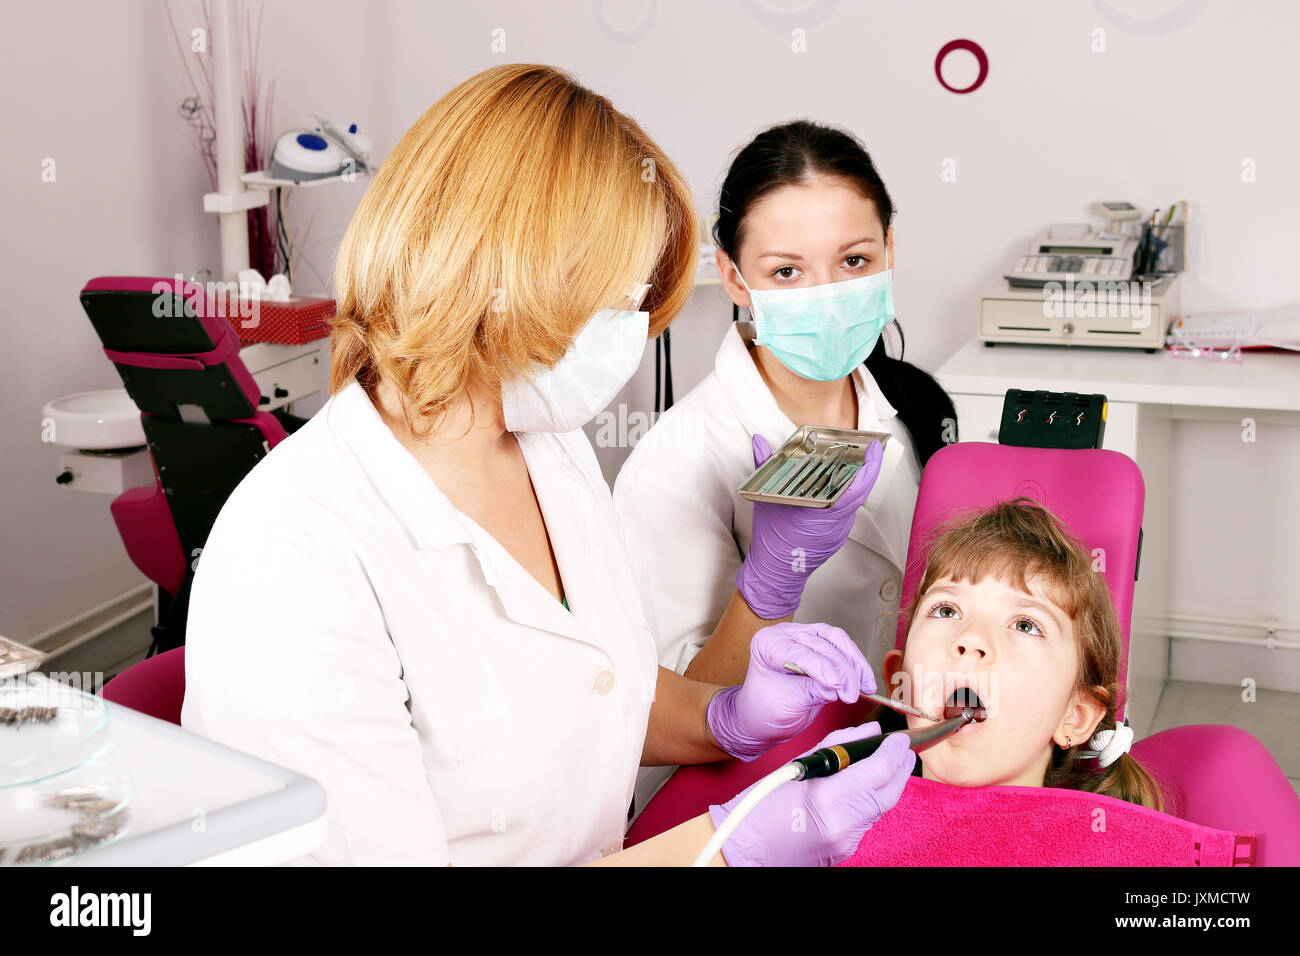 dentist nurse and child dental exam Stock Photo